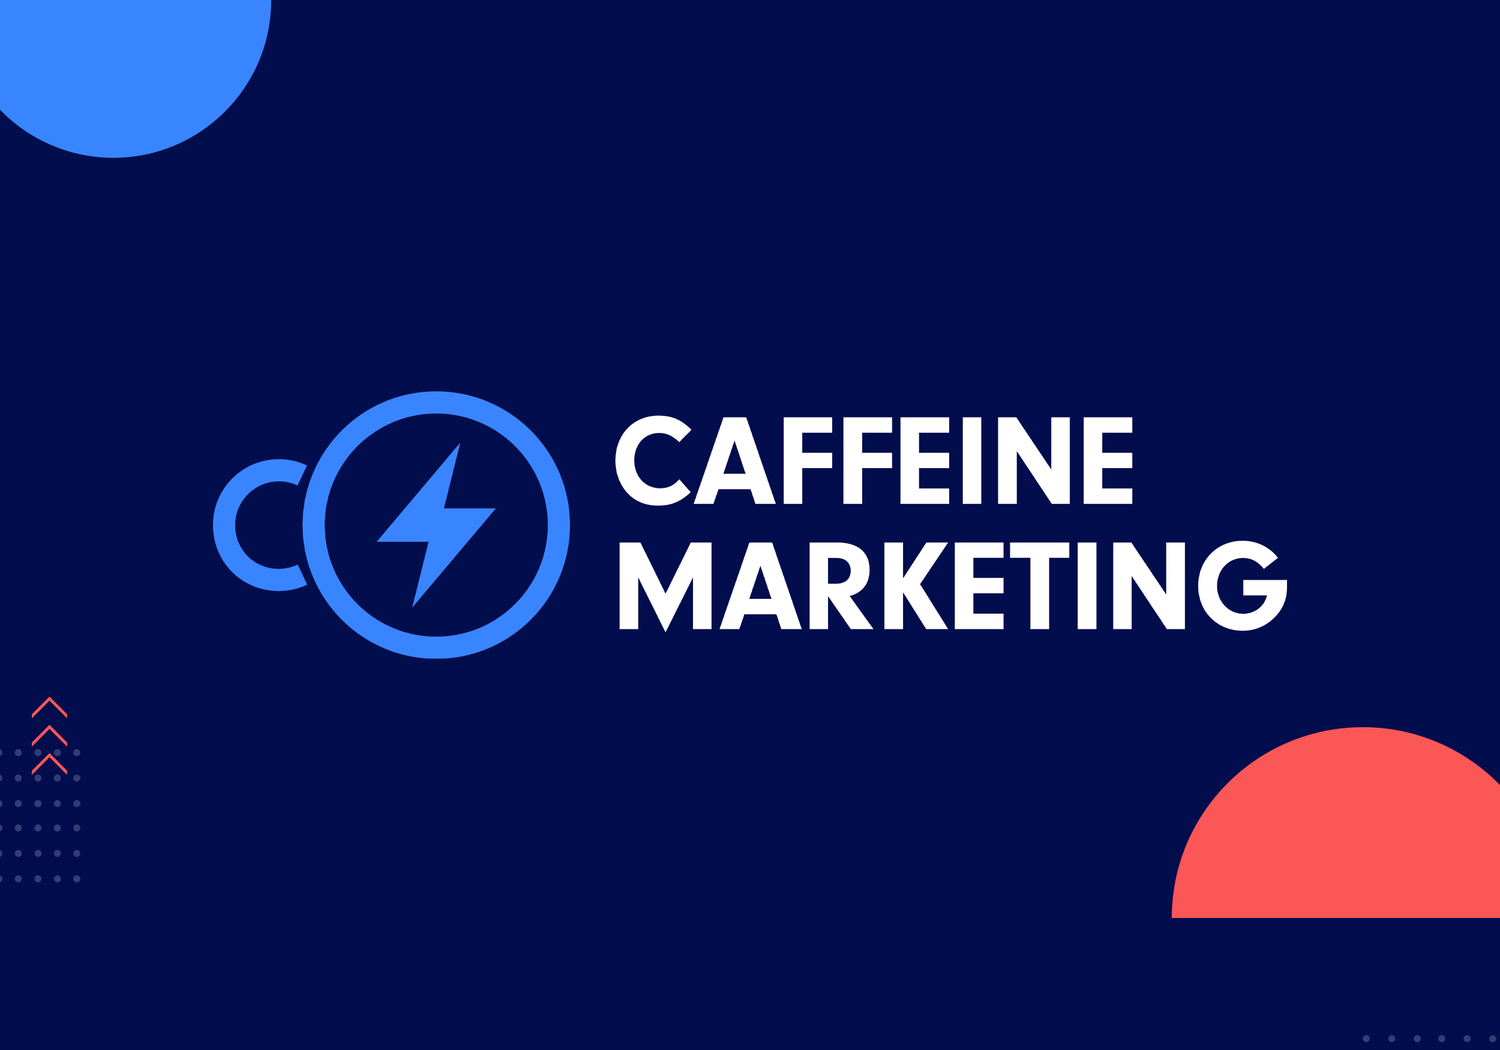 (c) Caffeinemarketing.com